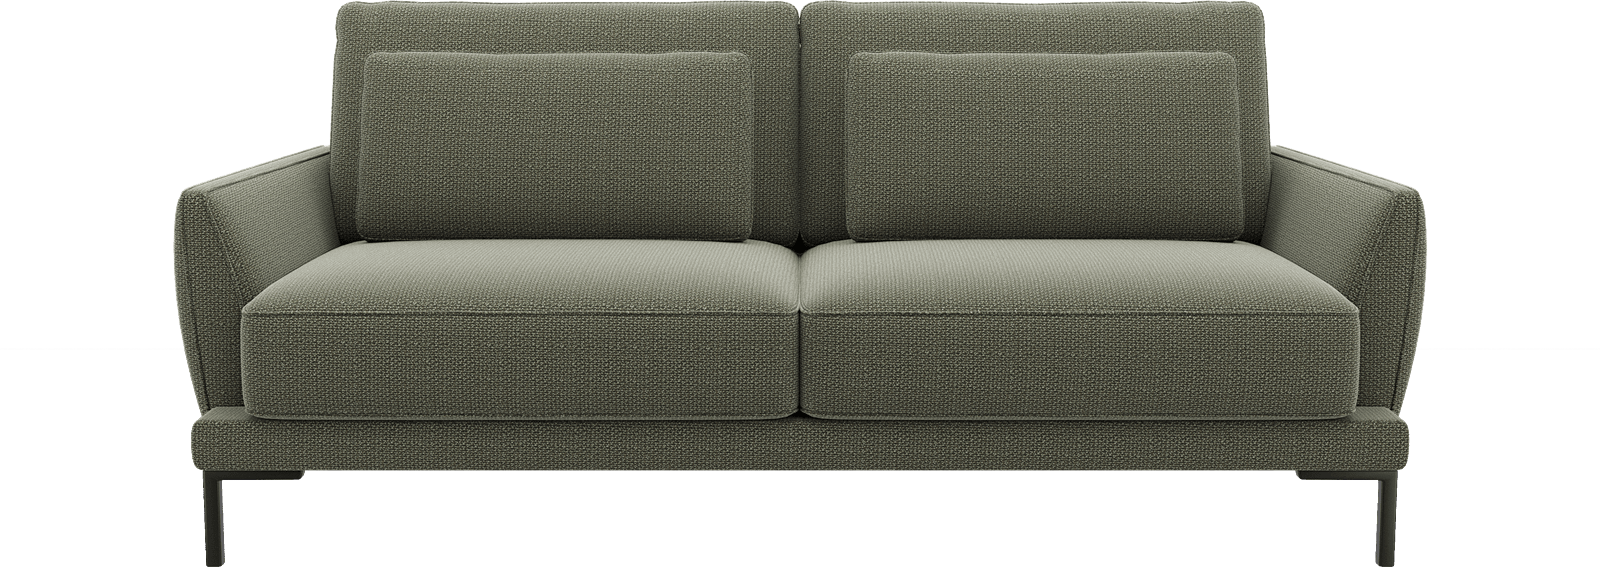 XOOON - Toledos - Minimalistisches Design - Sofas - 3-Sitzer